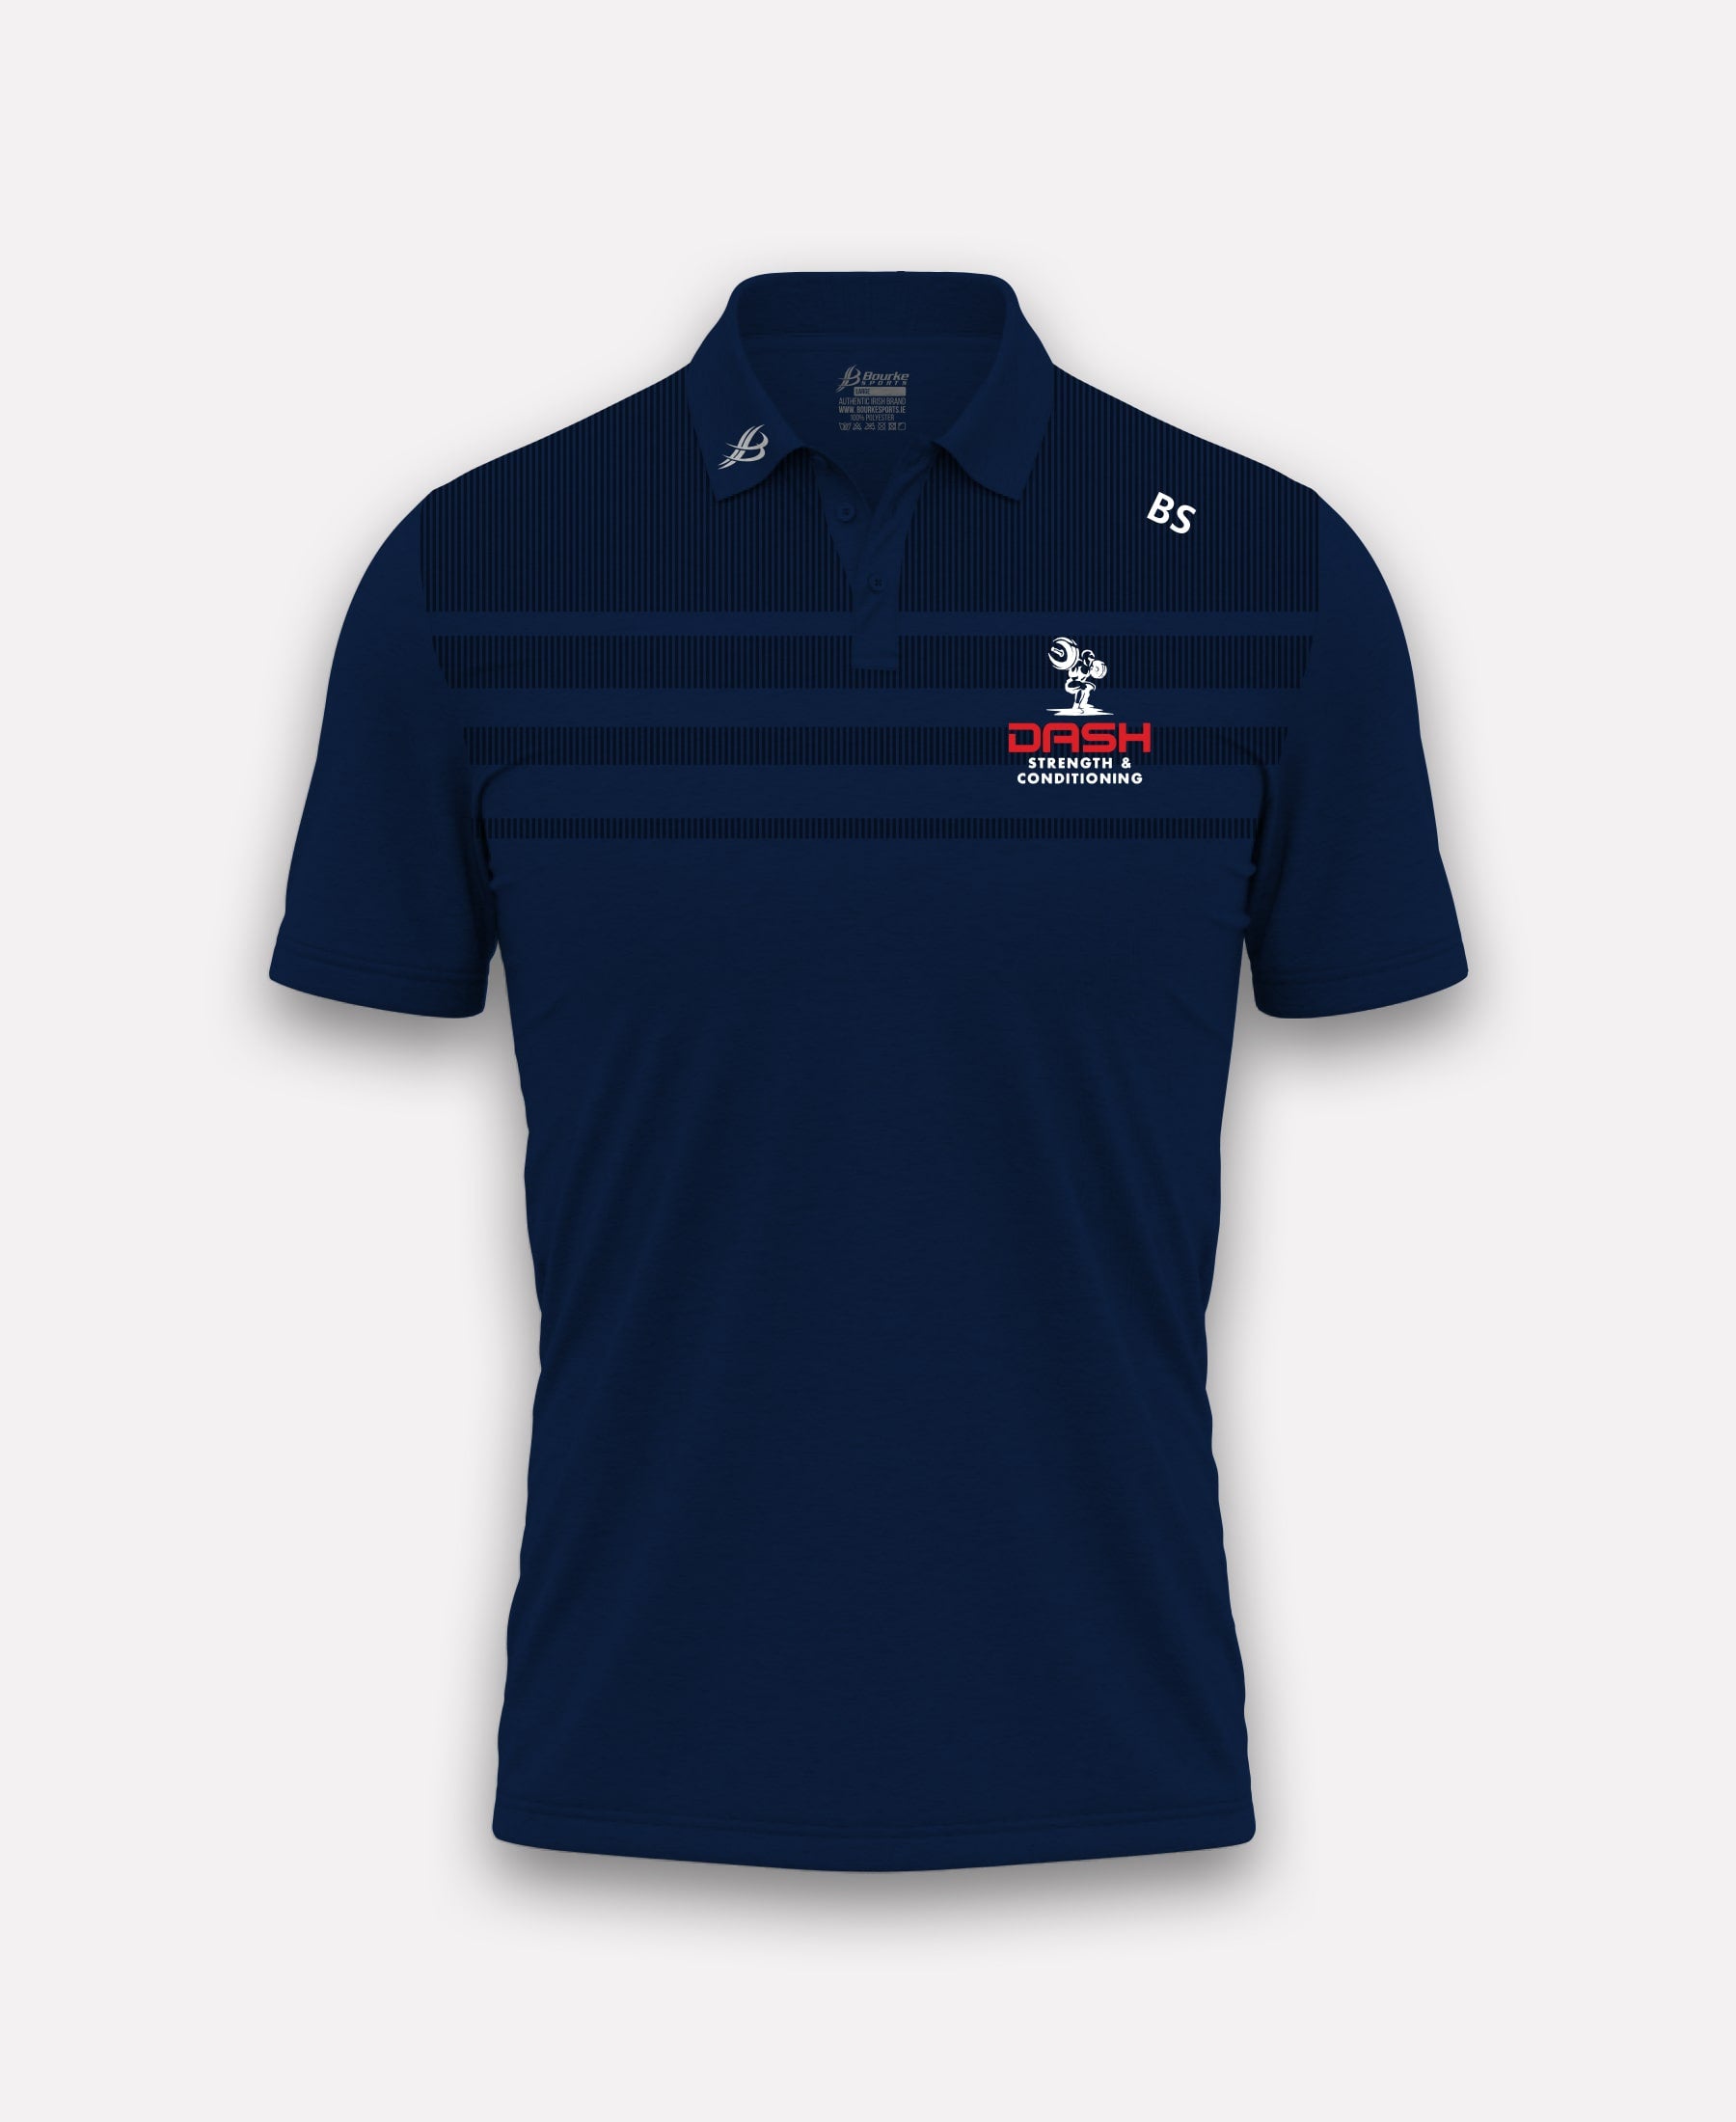 DASH Strength & Conditioning TACA Polo Shirt (Navy)